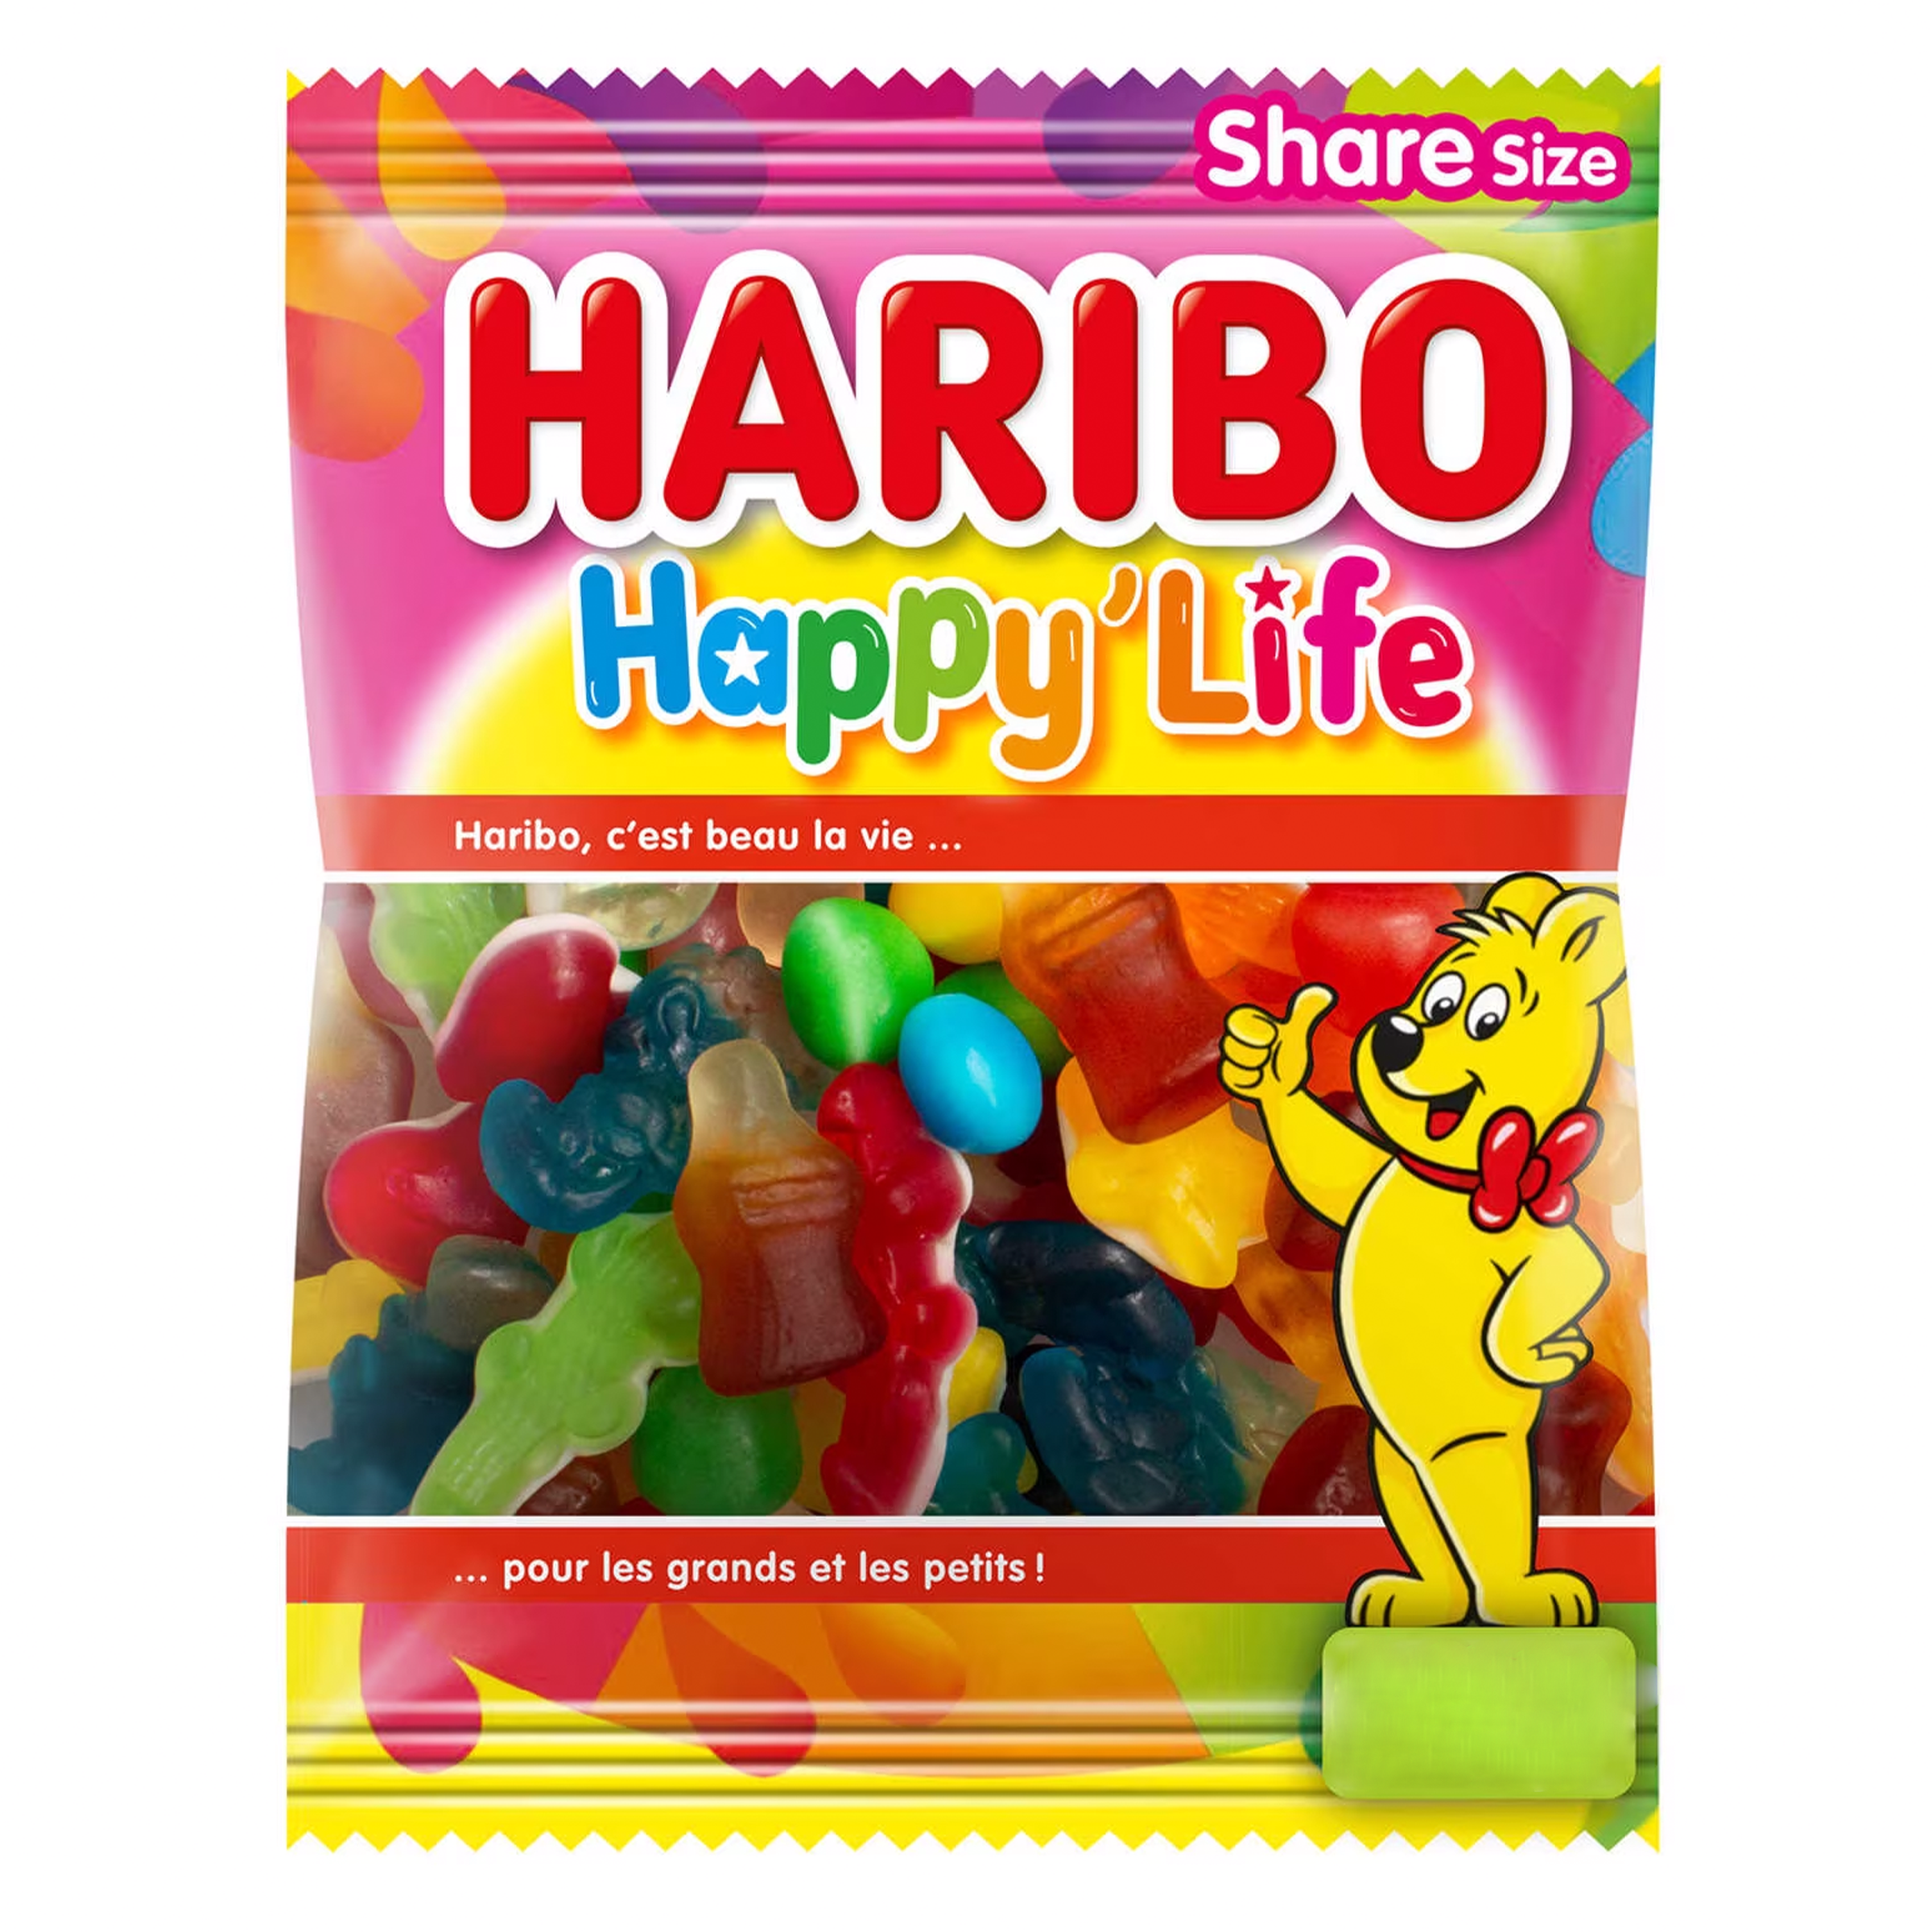 Haribo - Happy Life (Europe)